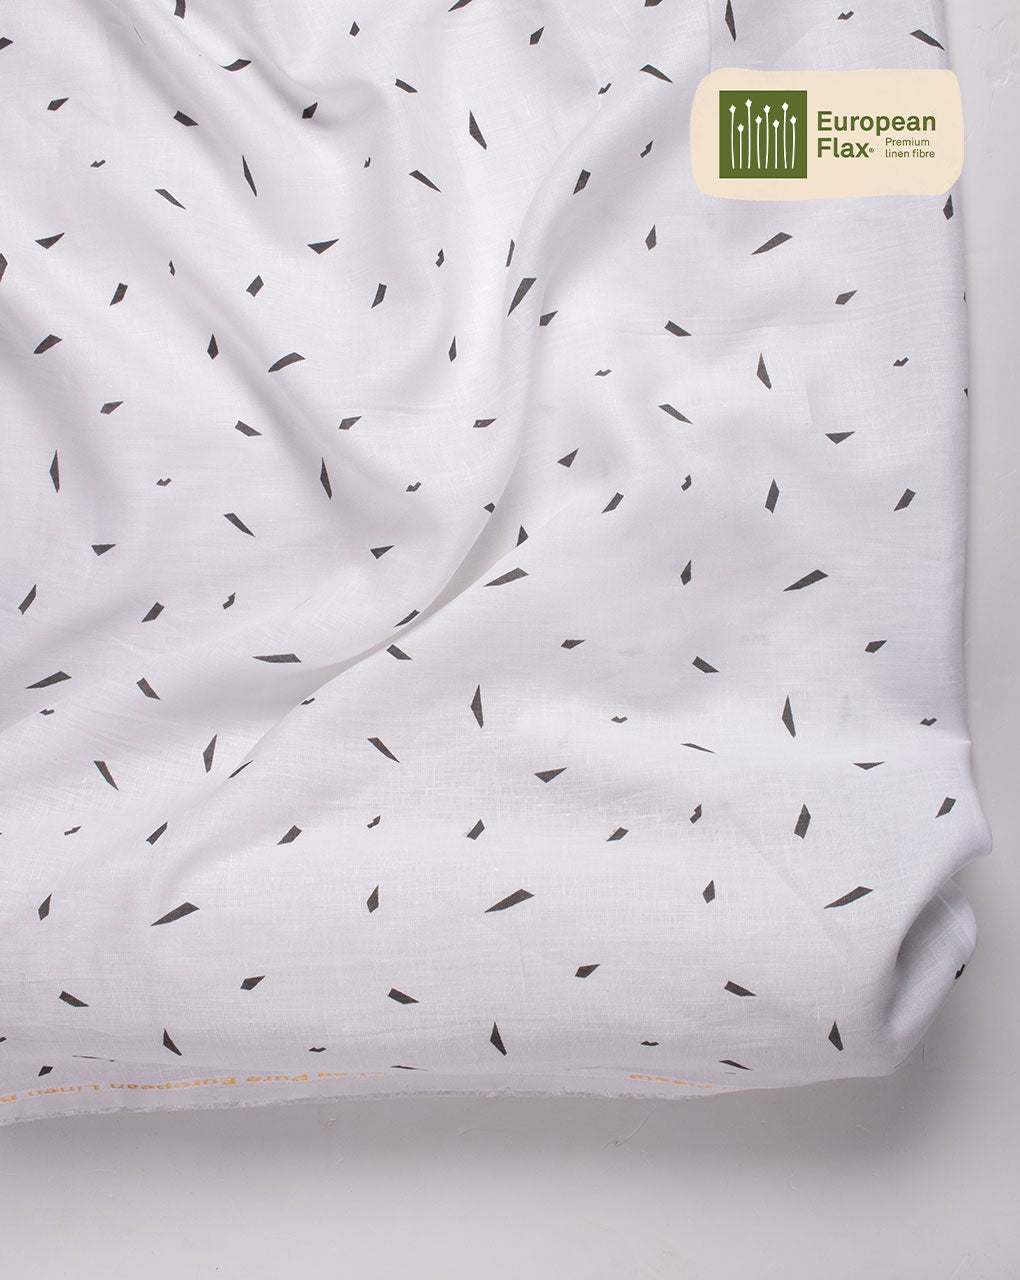 Printed Linen European Flax Certified Fabric ( Width 58 Inch ) - Fabriclore.com